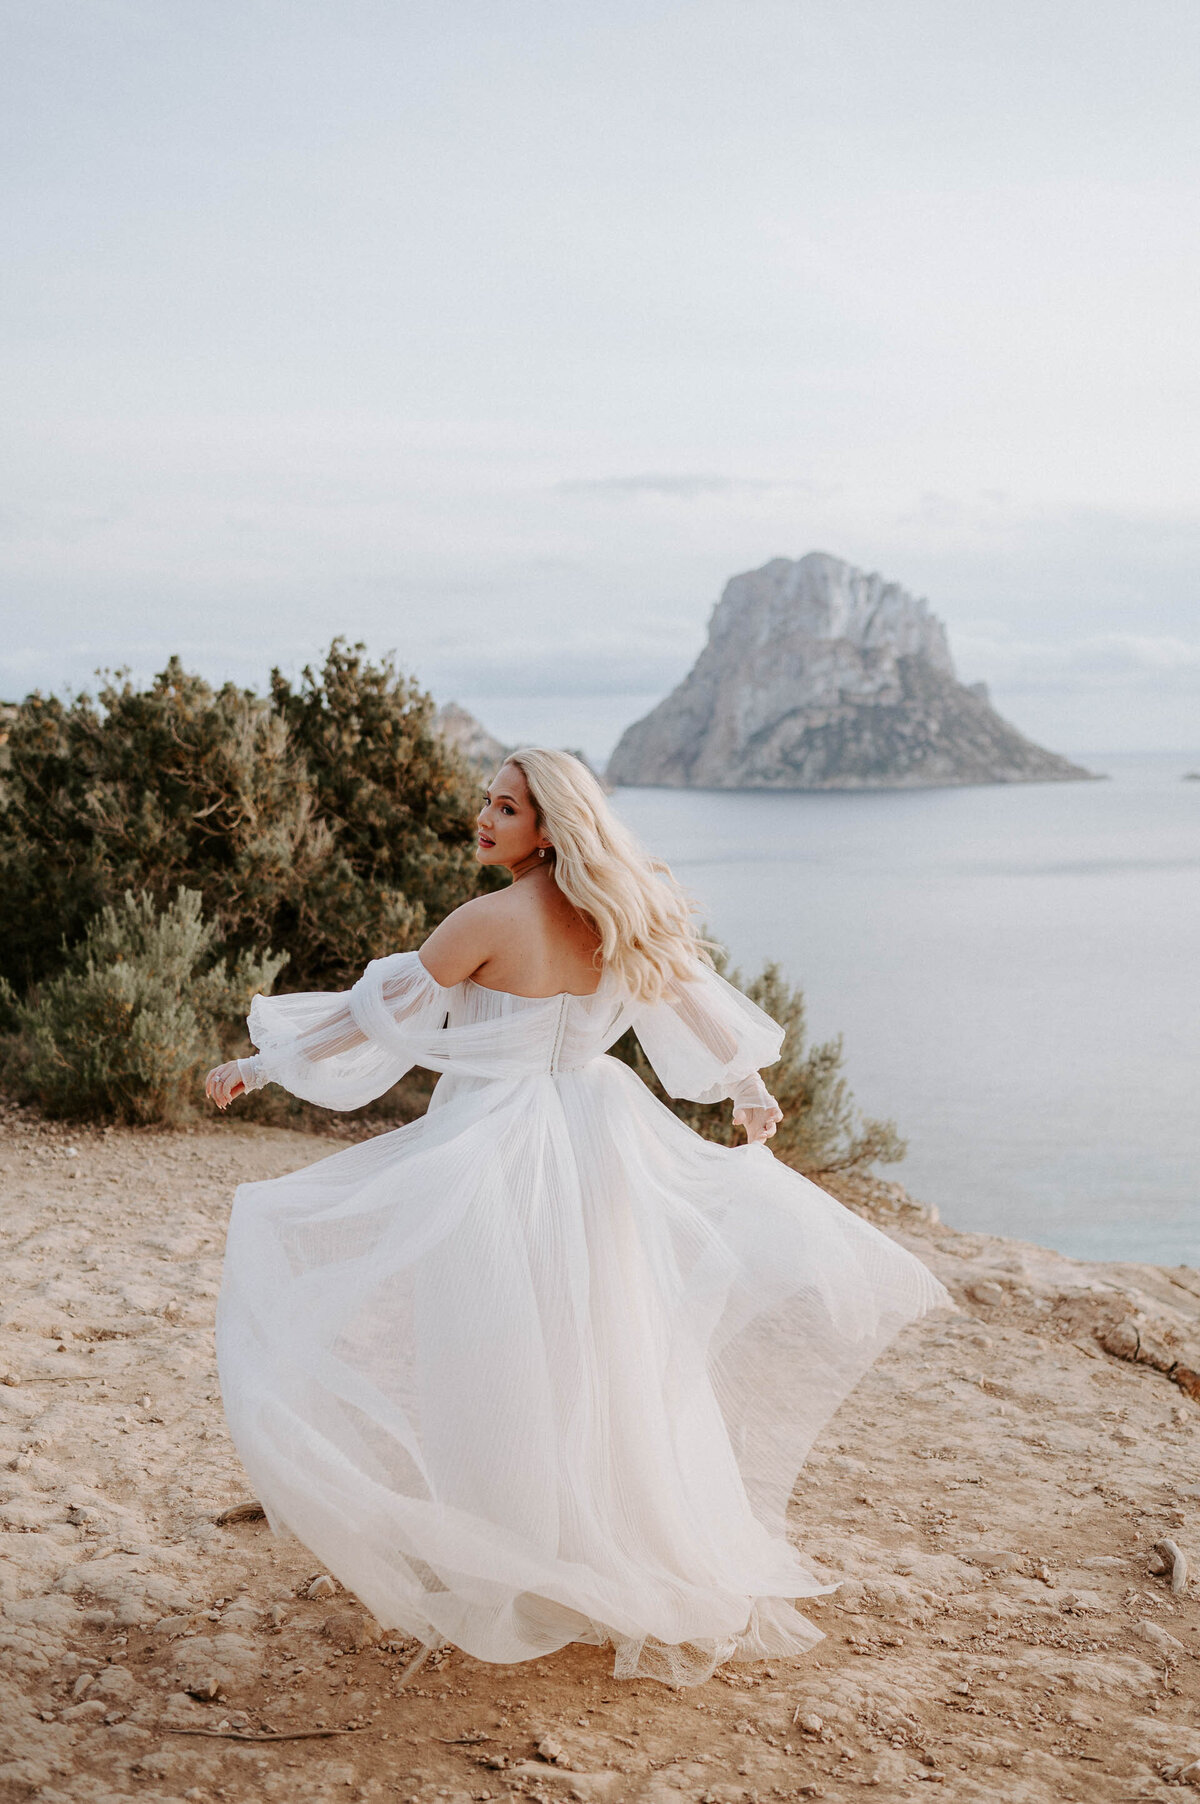 Es Vedra - Laura Williams Photography - 270 - Luxury Editorial Destination Wedding Photographer